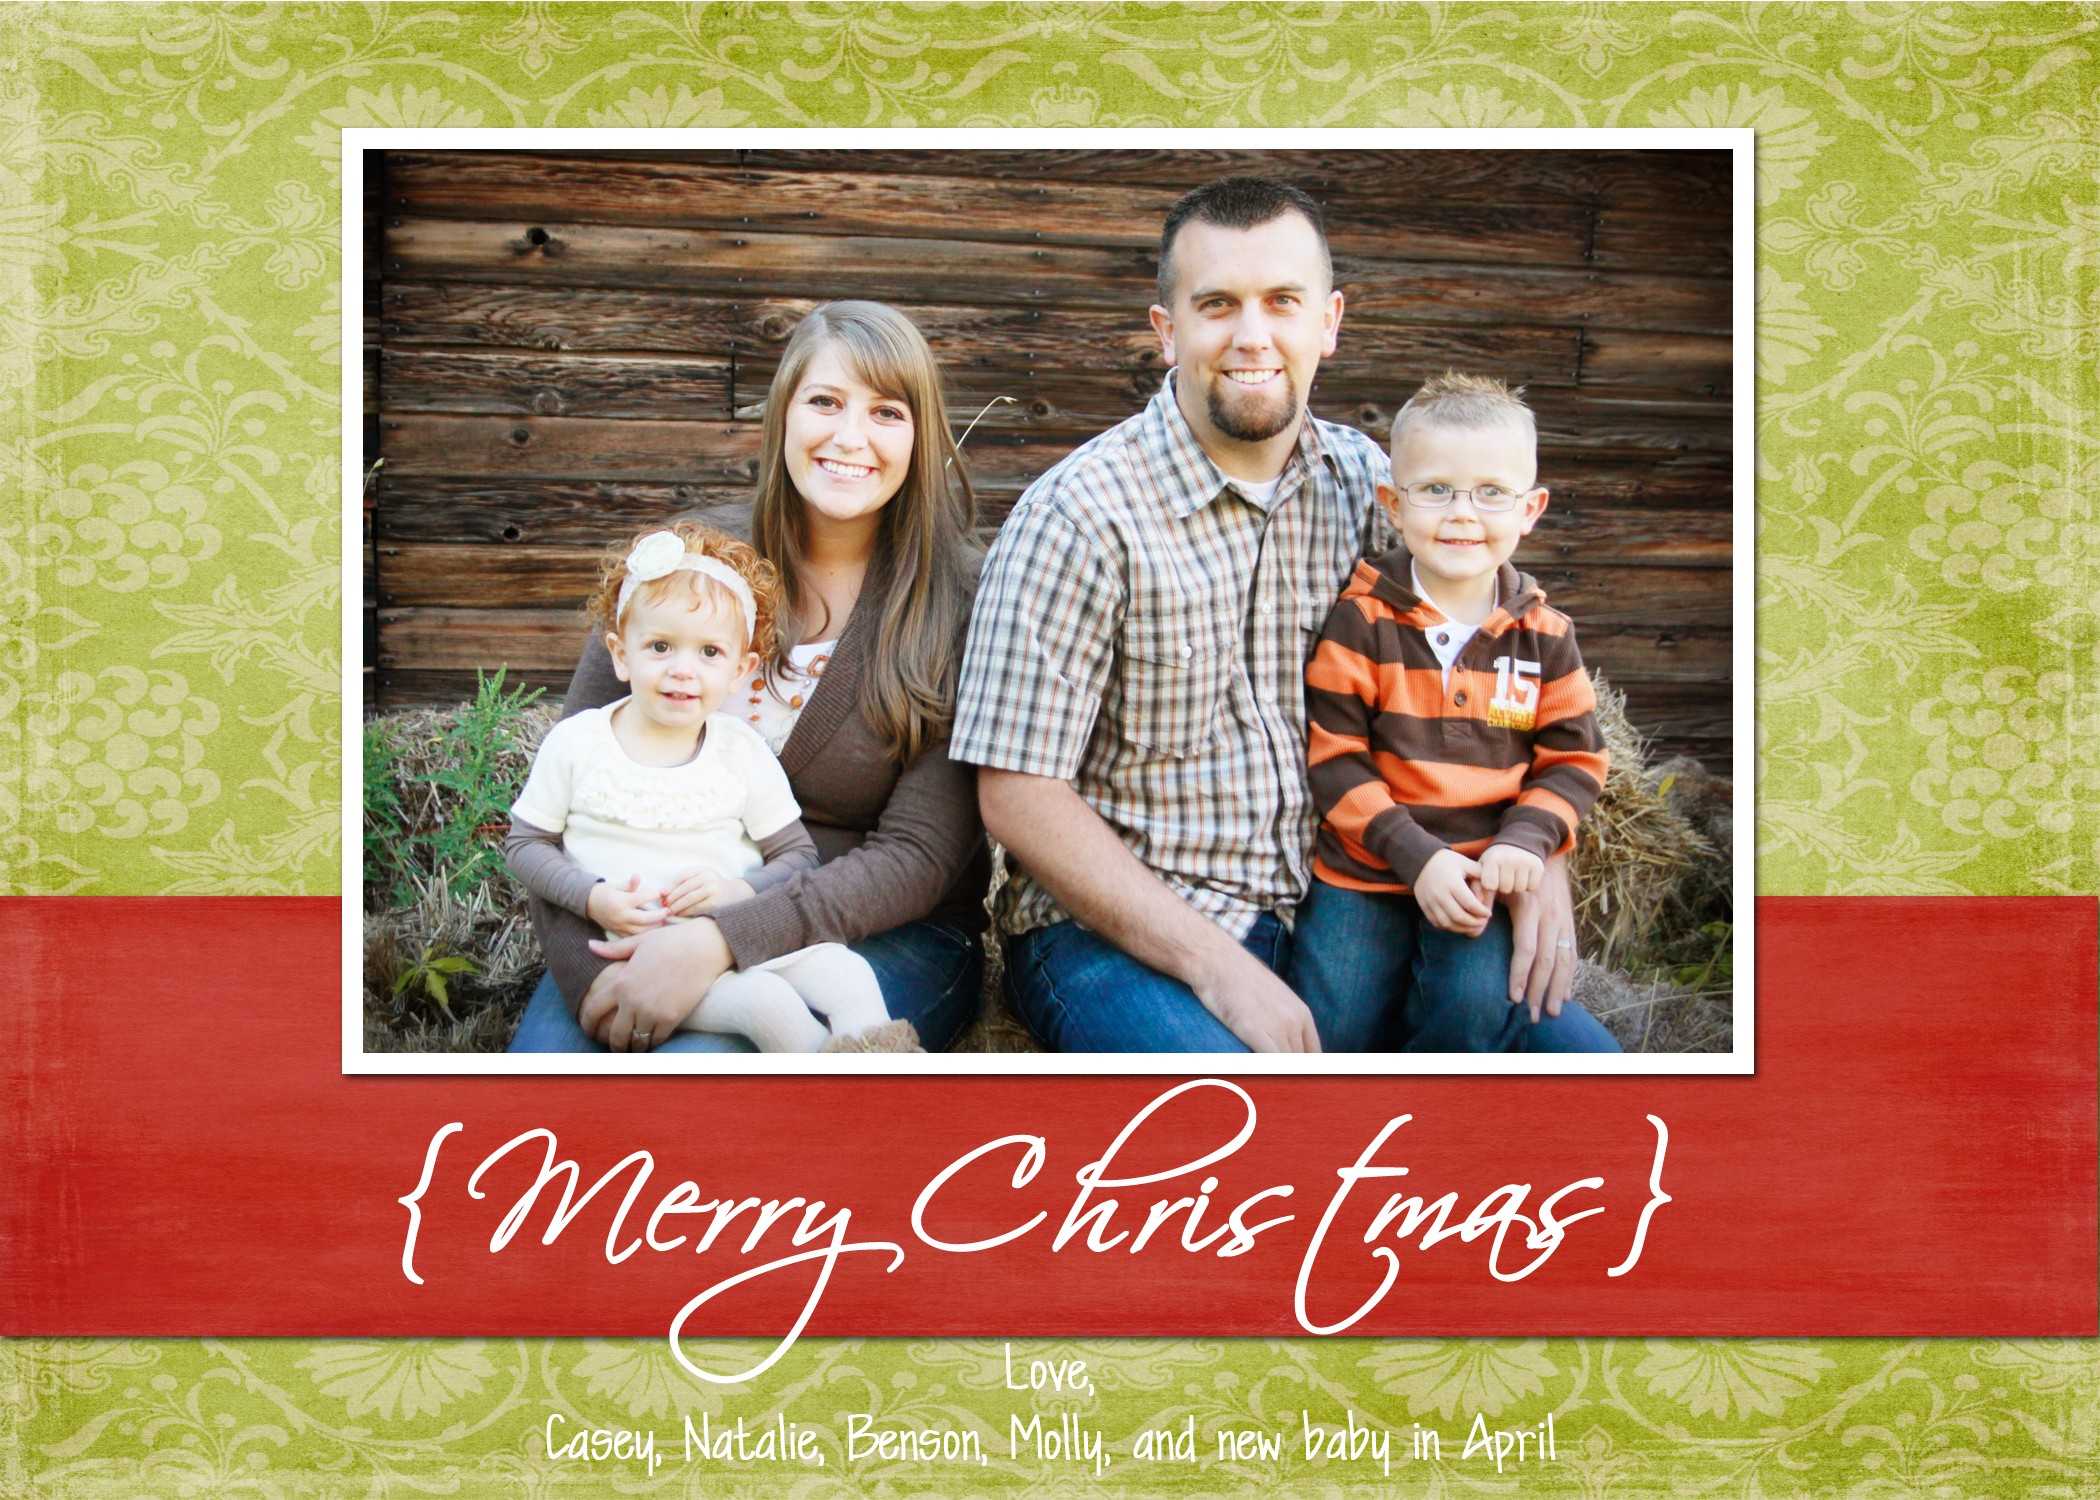 Christmas Holiday Card Templates For Photographers Photoshop Inside Free Photoshop Christmas Card Templates For Photographers